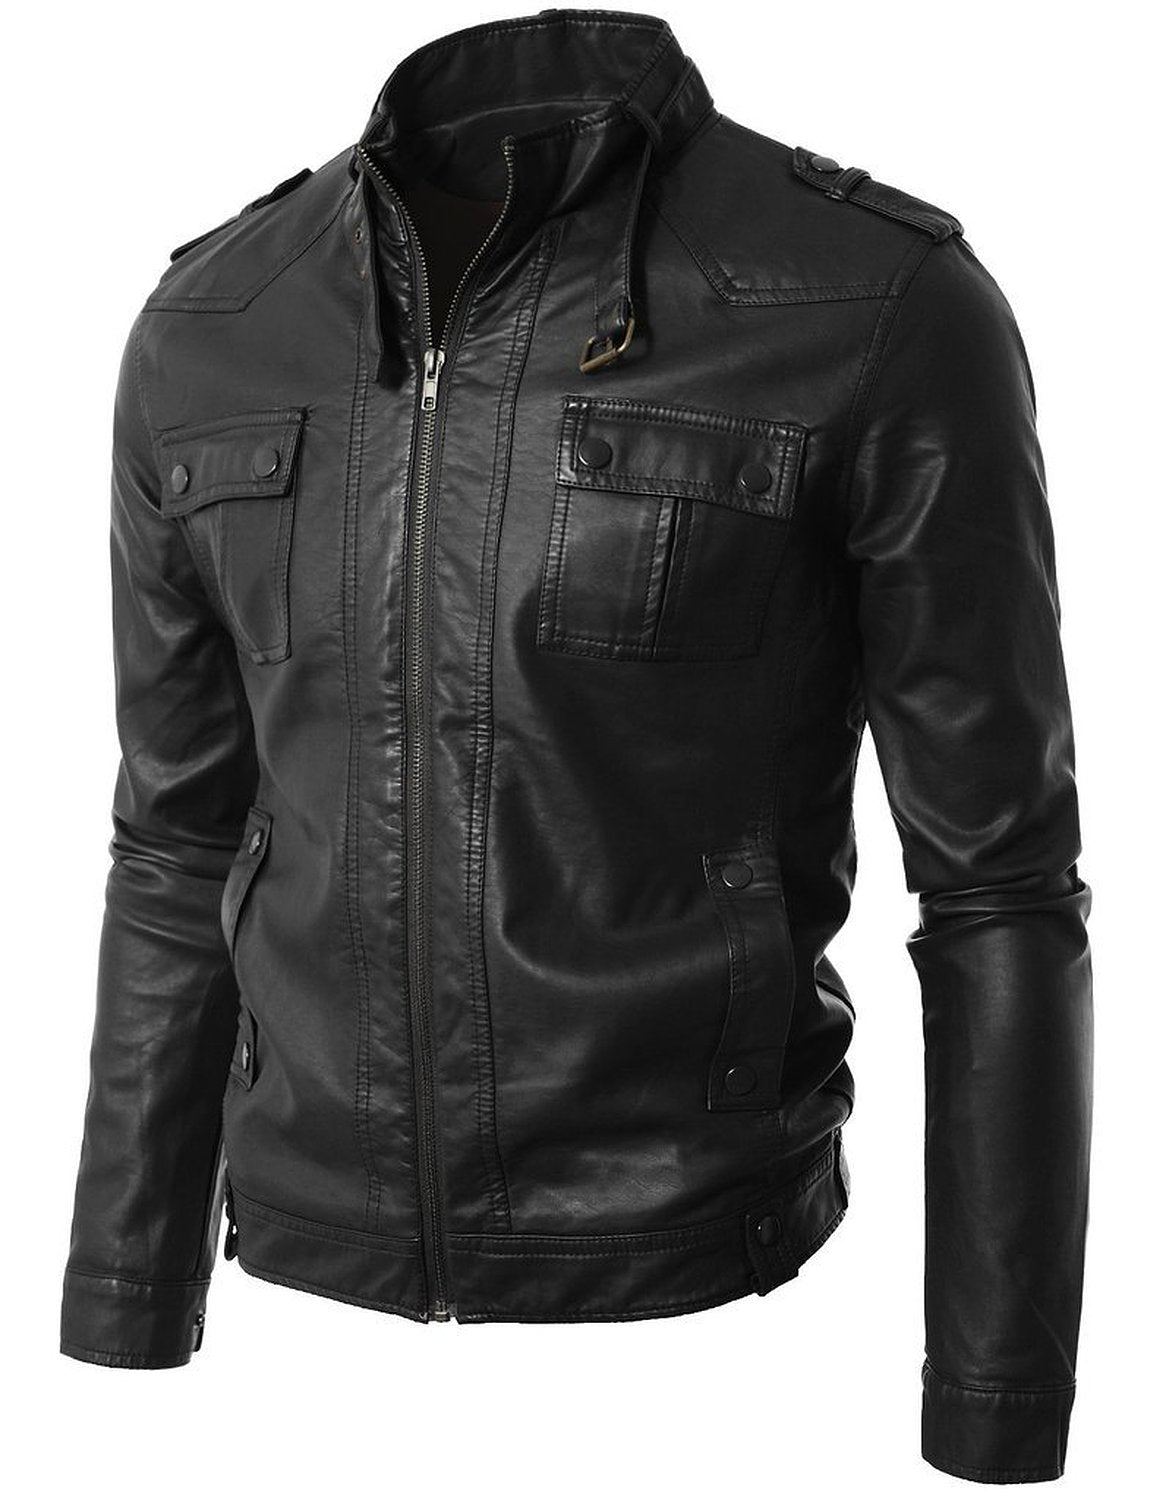 Leather Jackets Hub Mens Genuine Cowhide Leather Jacket (Black, Regal Jacket) - 1501652